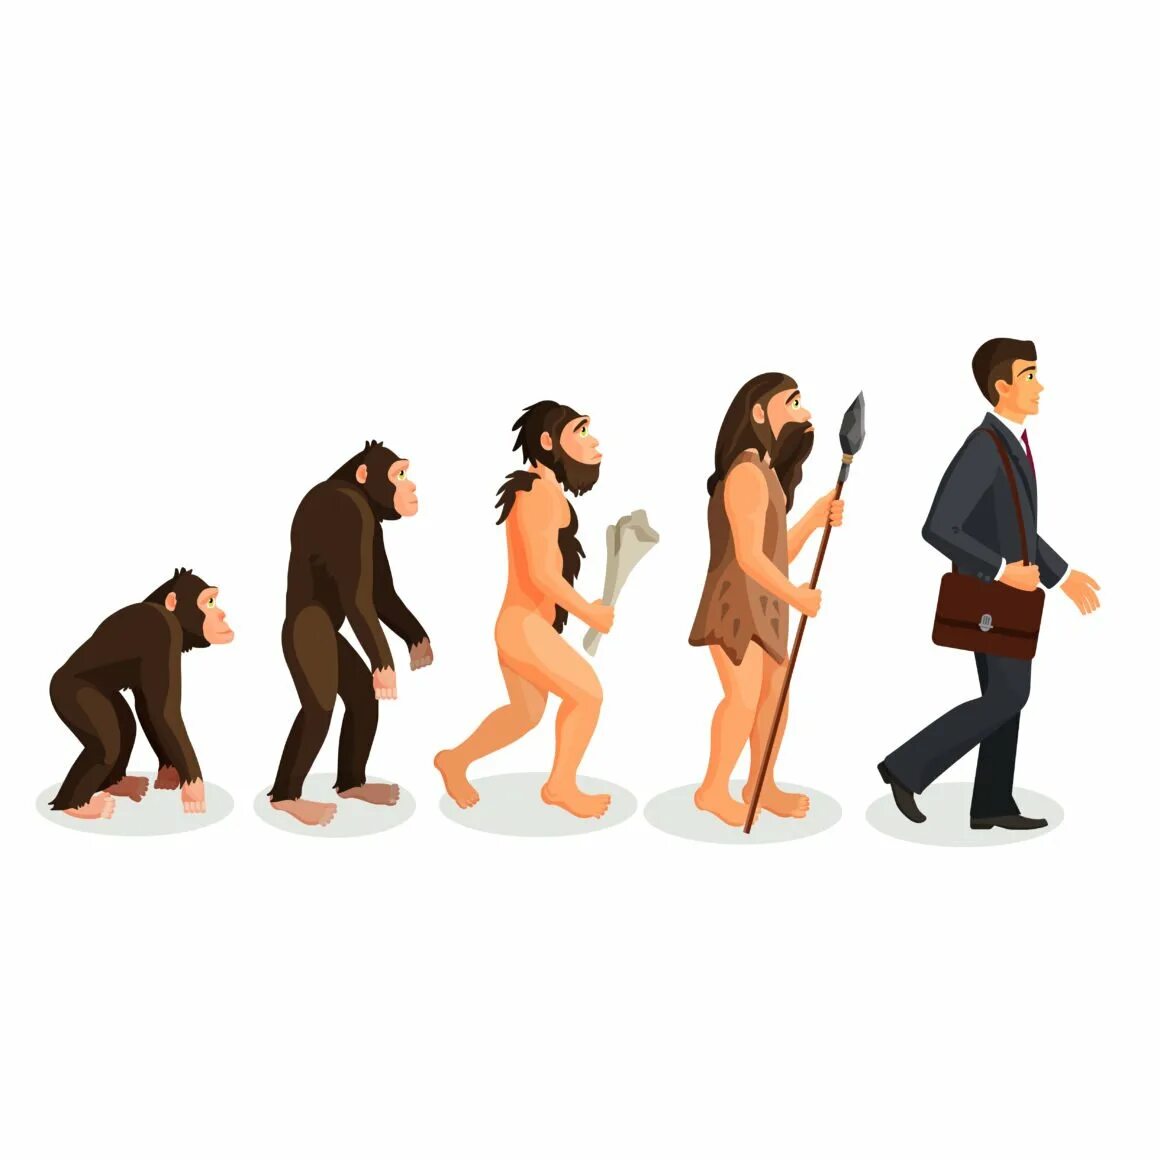 Эволюция человека. Эволюция человека от обезьяны. Превращение обезьяны в человека. Эволюция обезьяны в человека. Процесс превращения человека в обезьяну